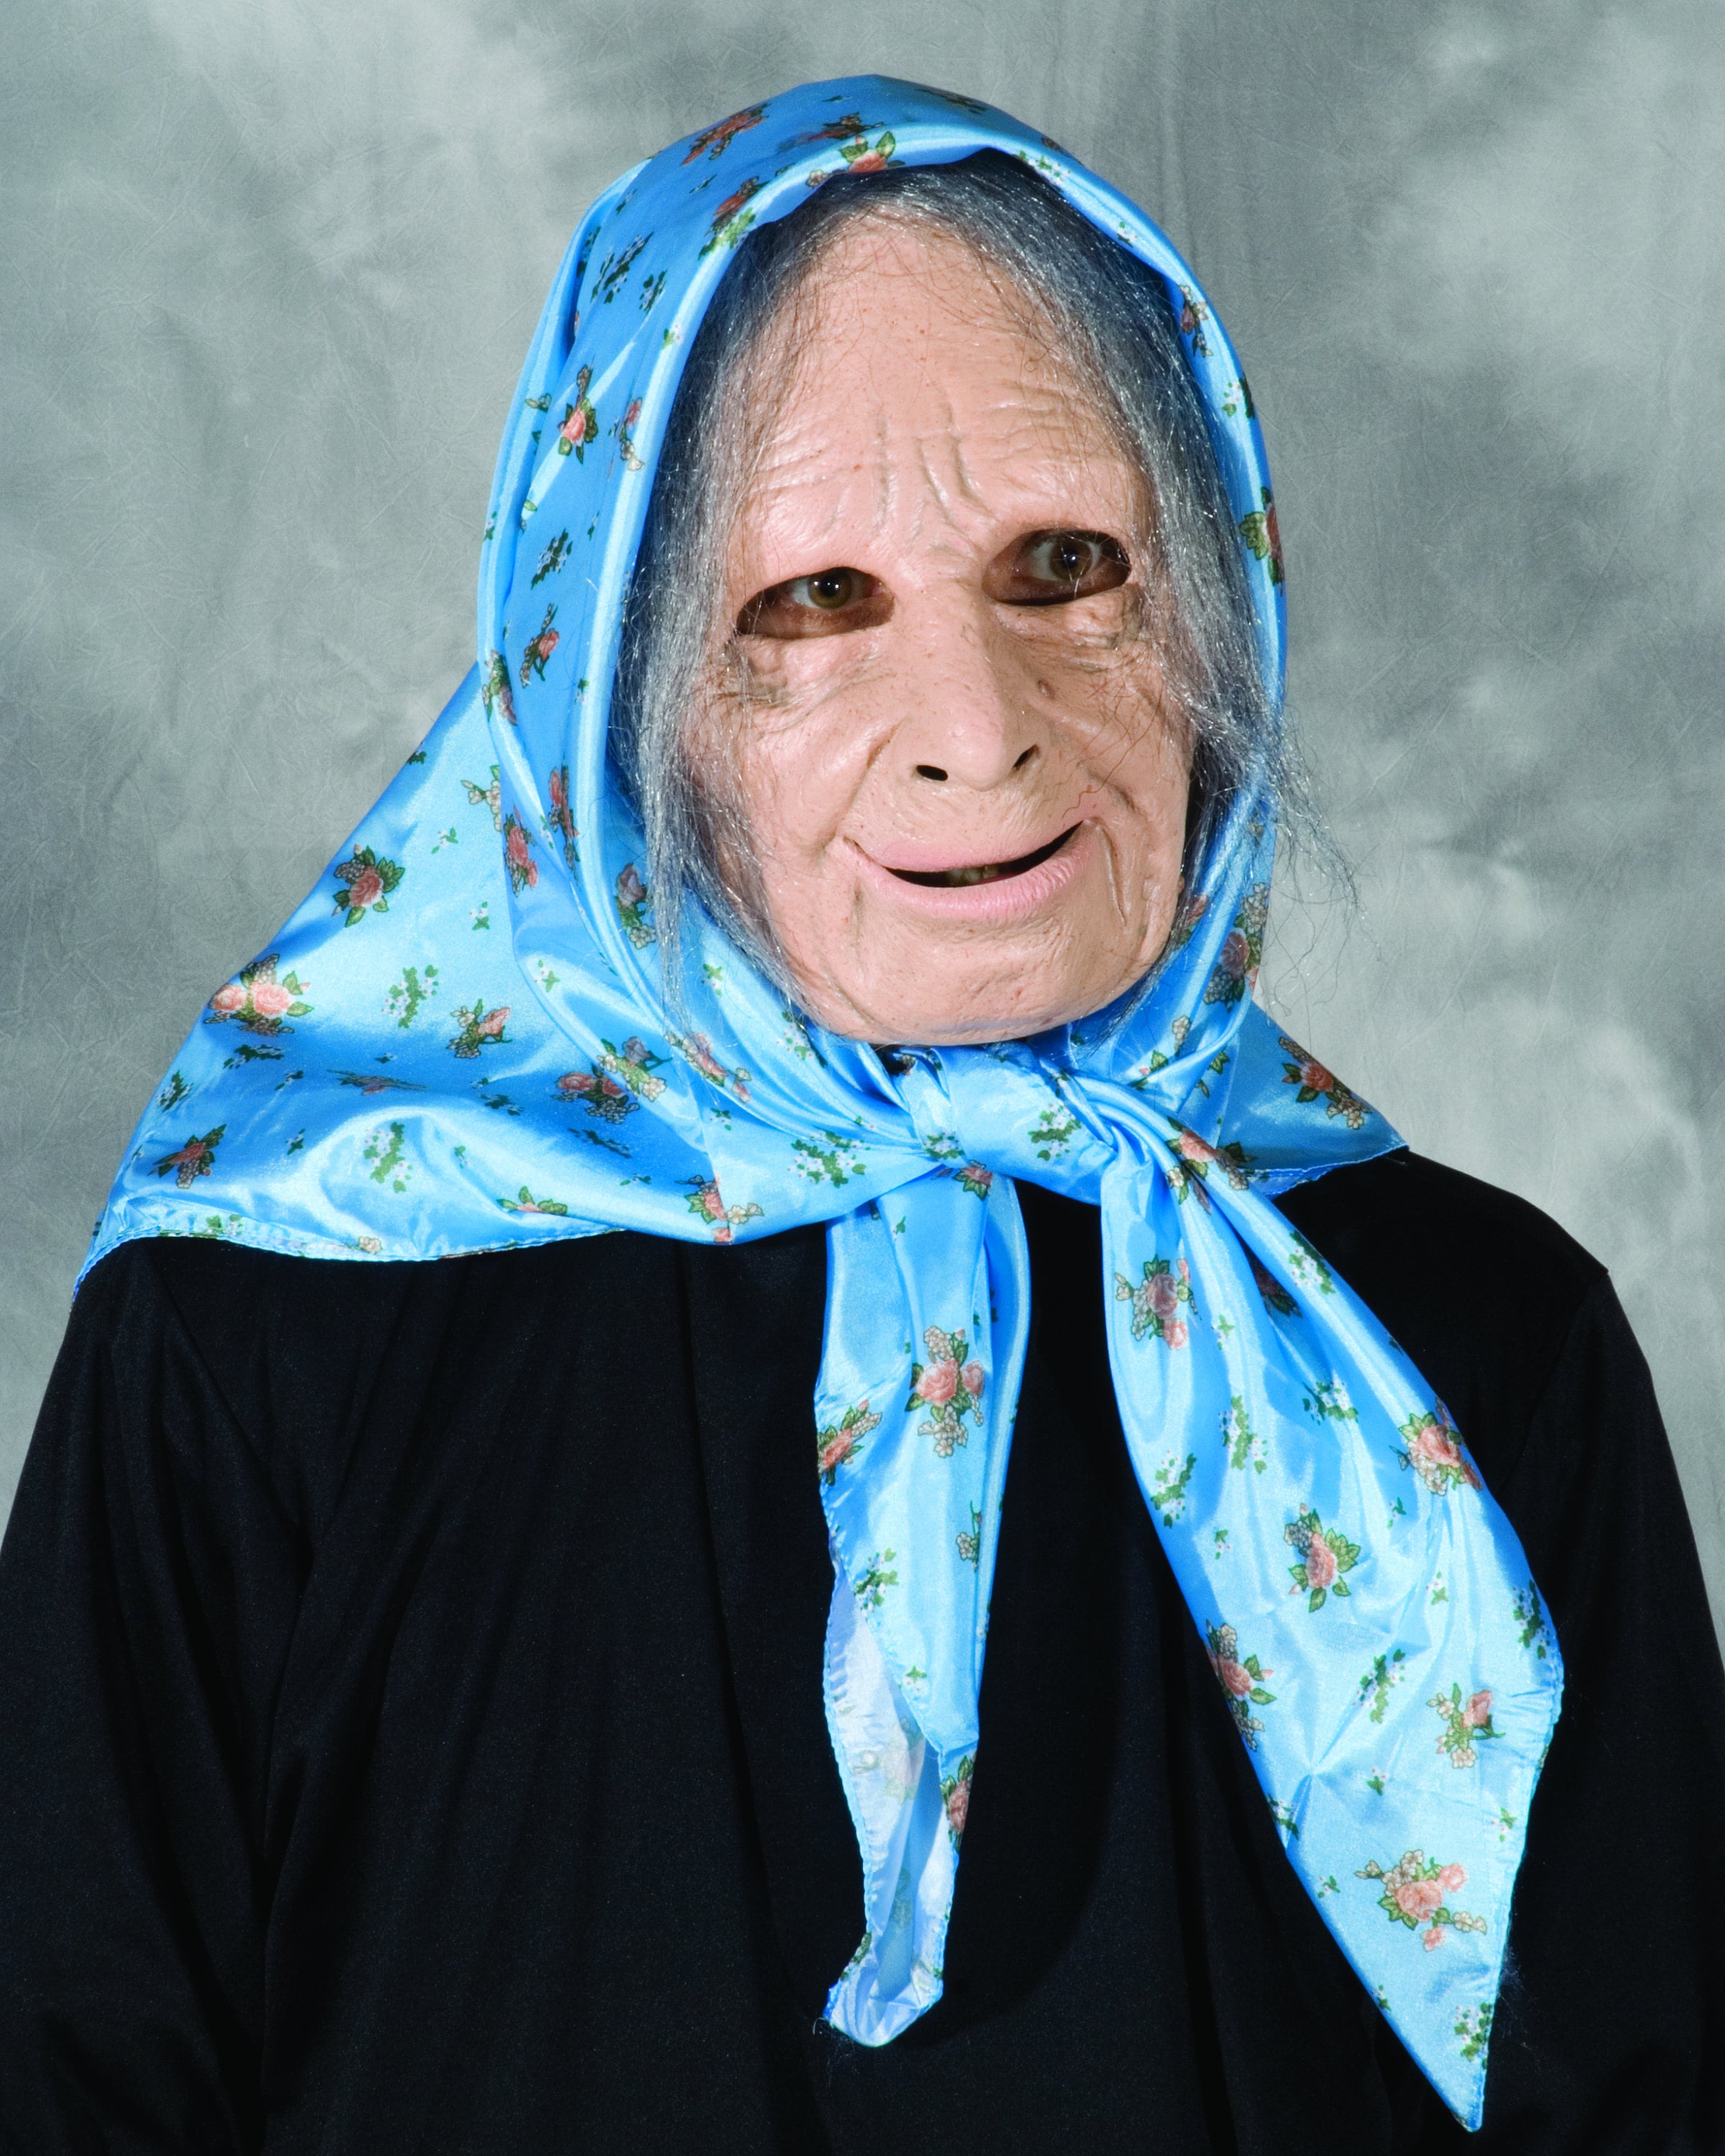 Nana Mask Grandma Old Lady Hag Scarf Gray Hair Halloween